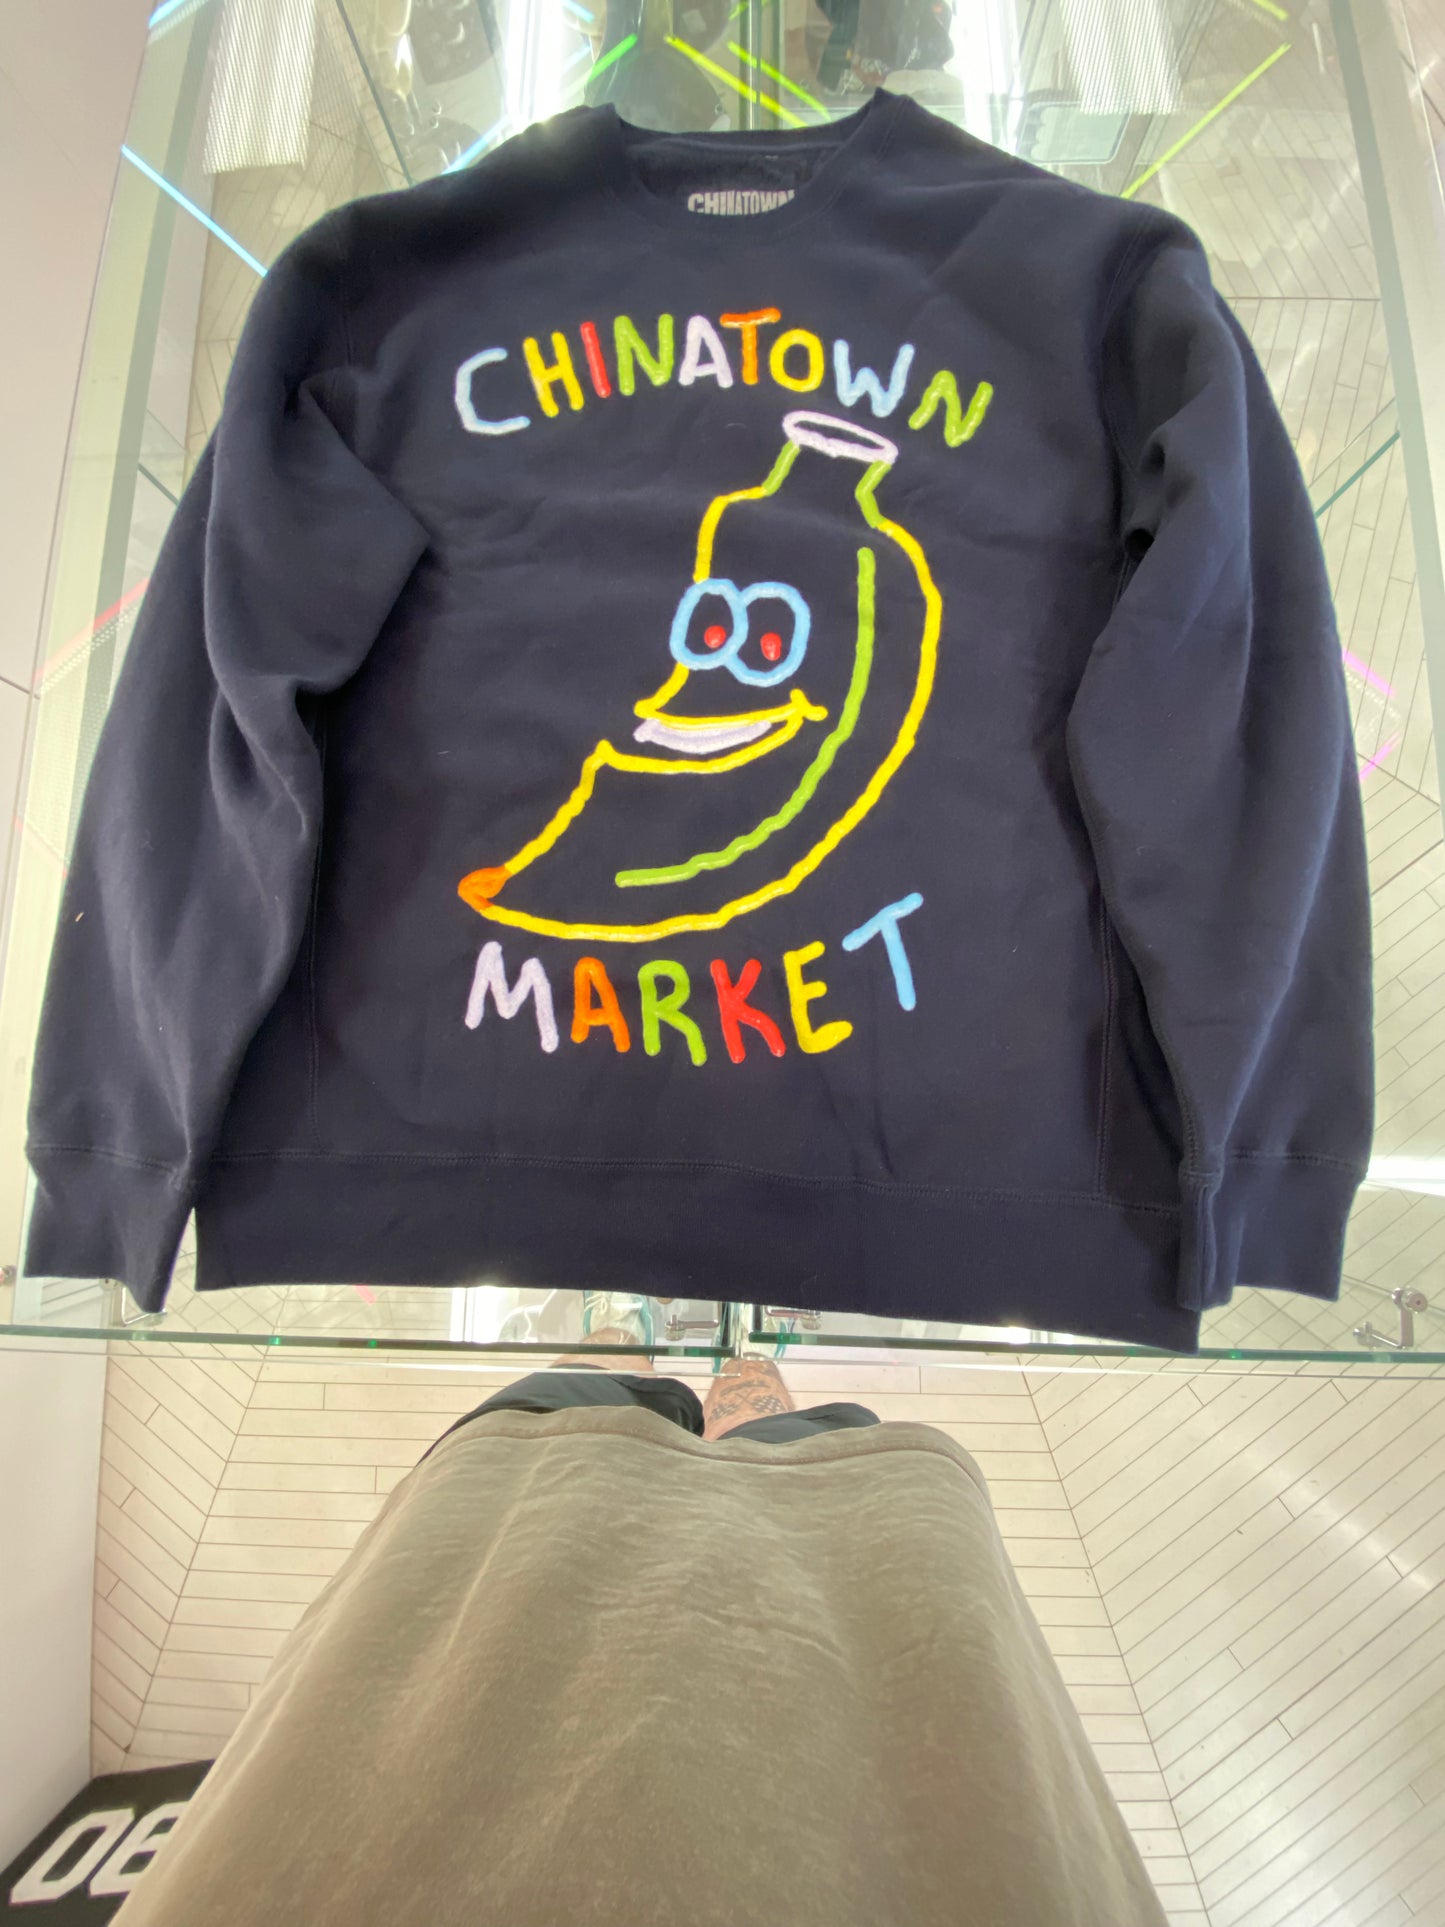 Chinatown Market Crewneck 2020